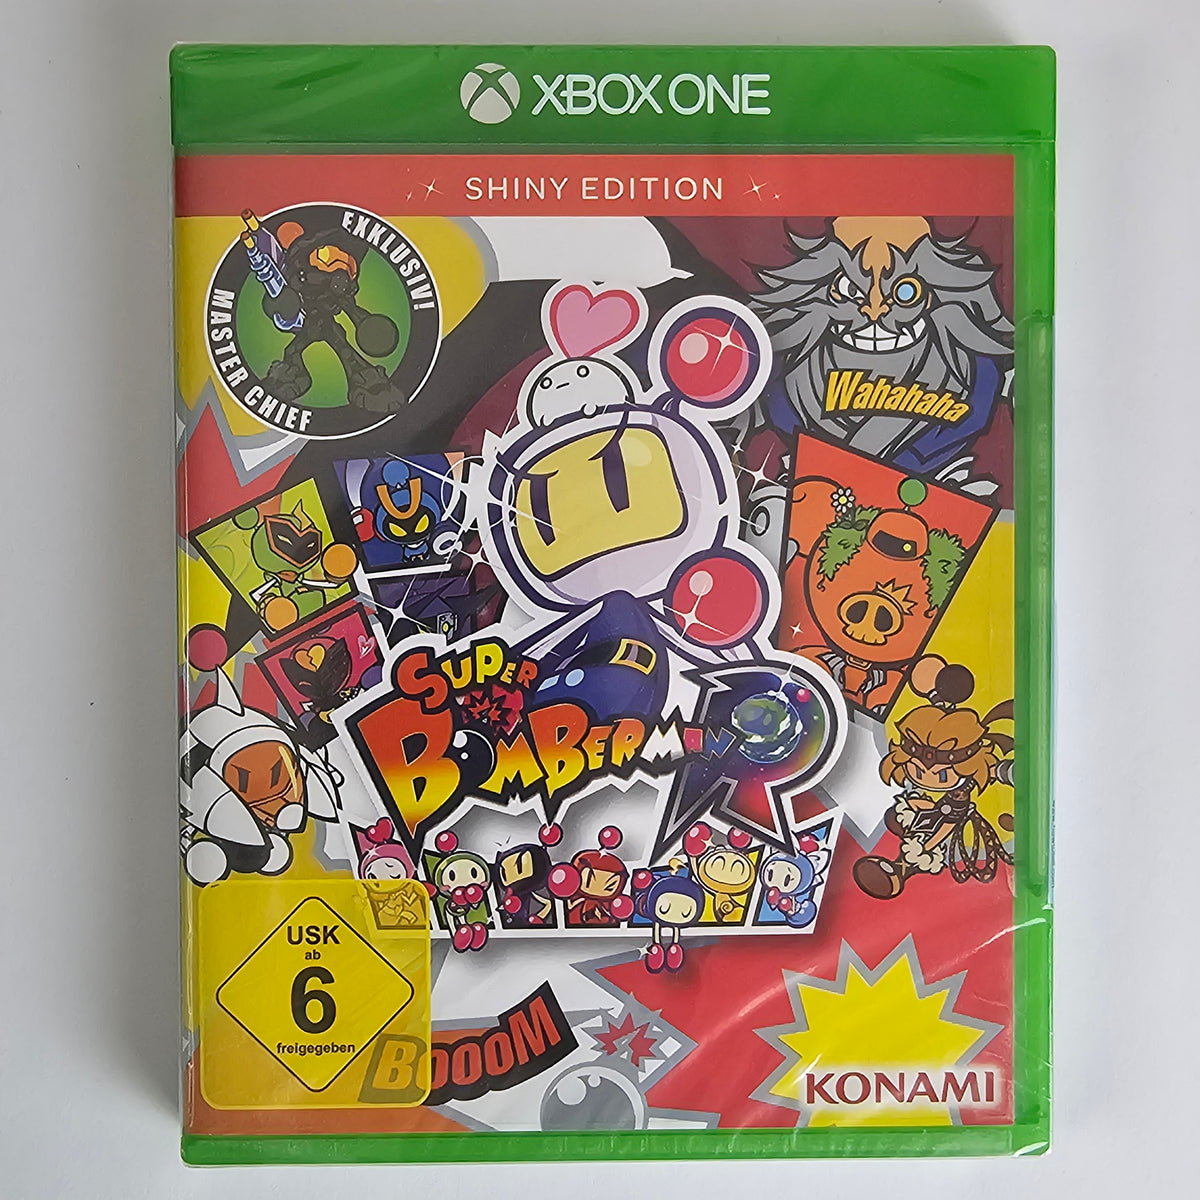 Super Bomberman R Shiny Edition [XBOXO]